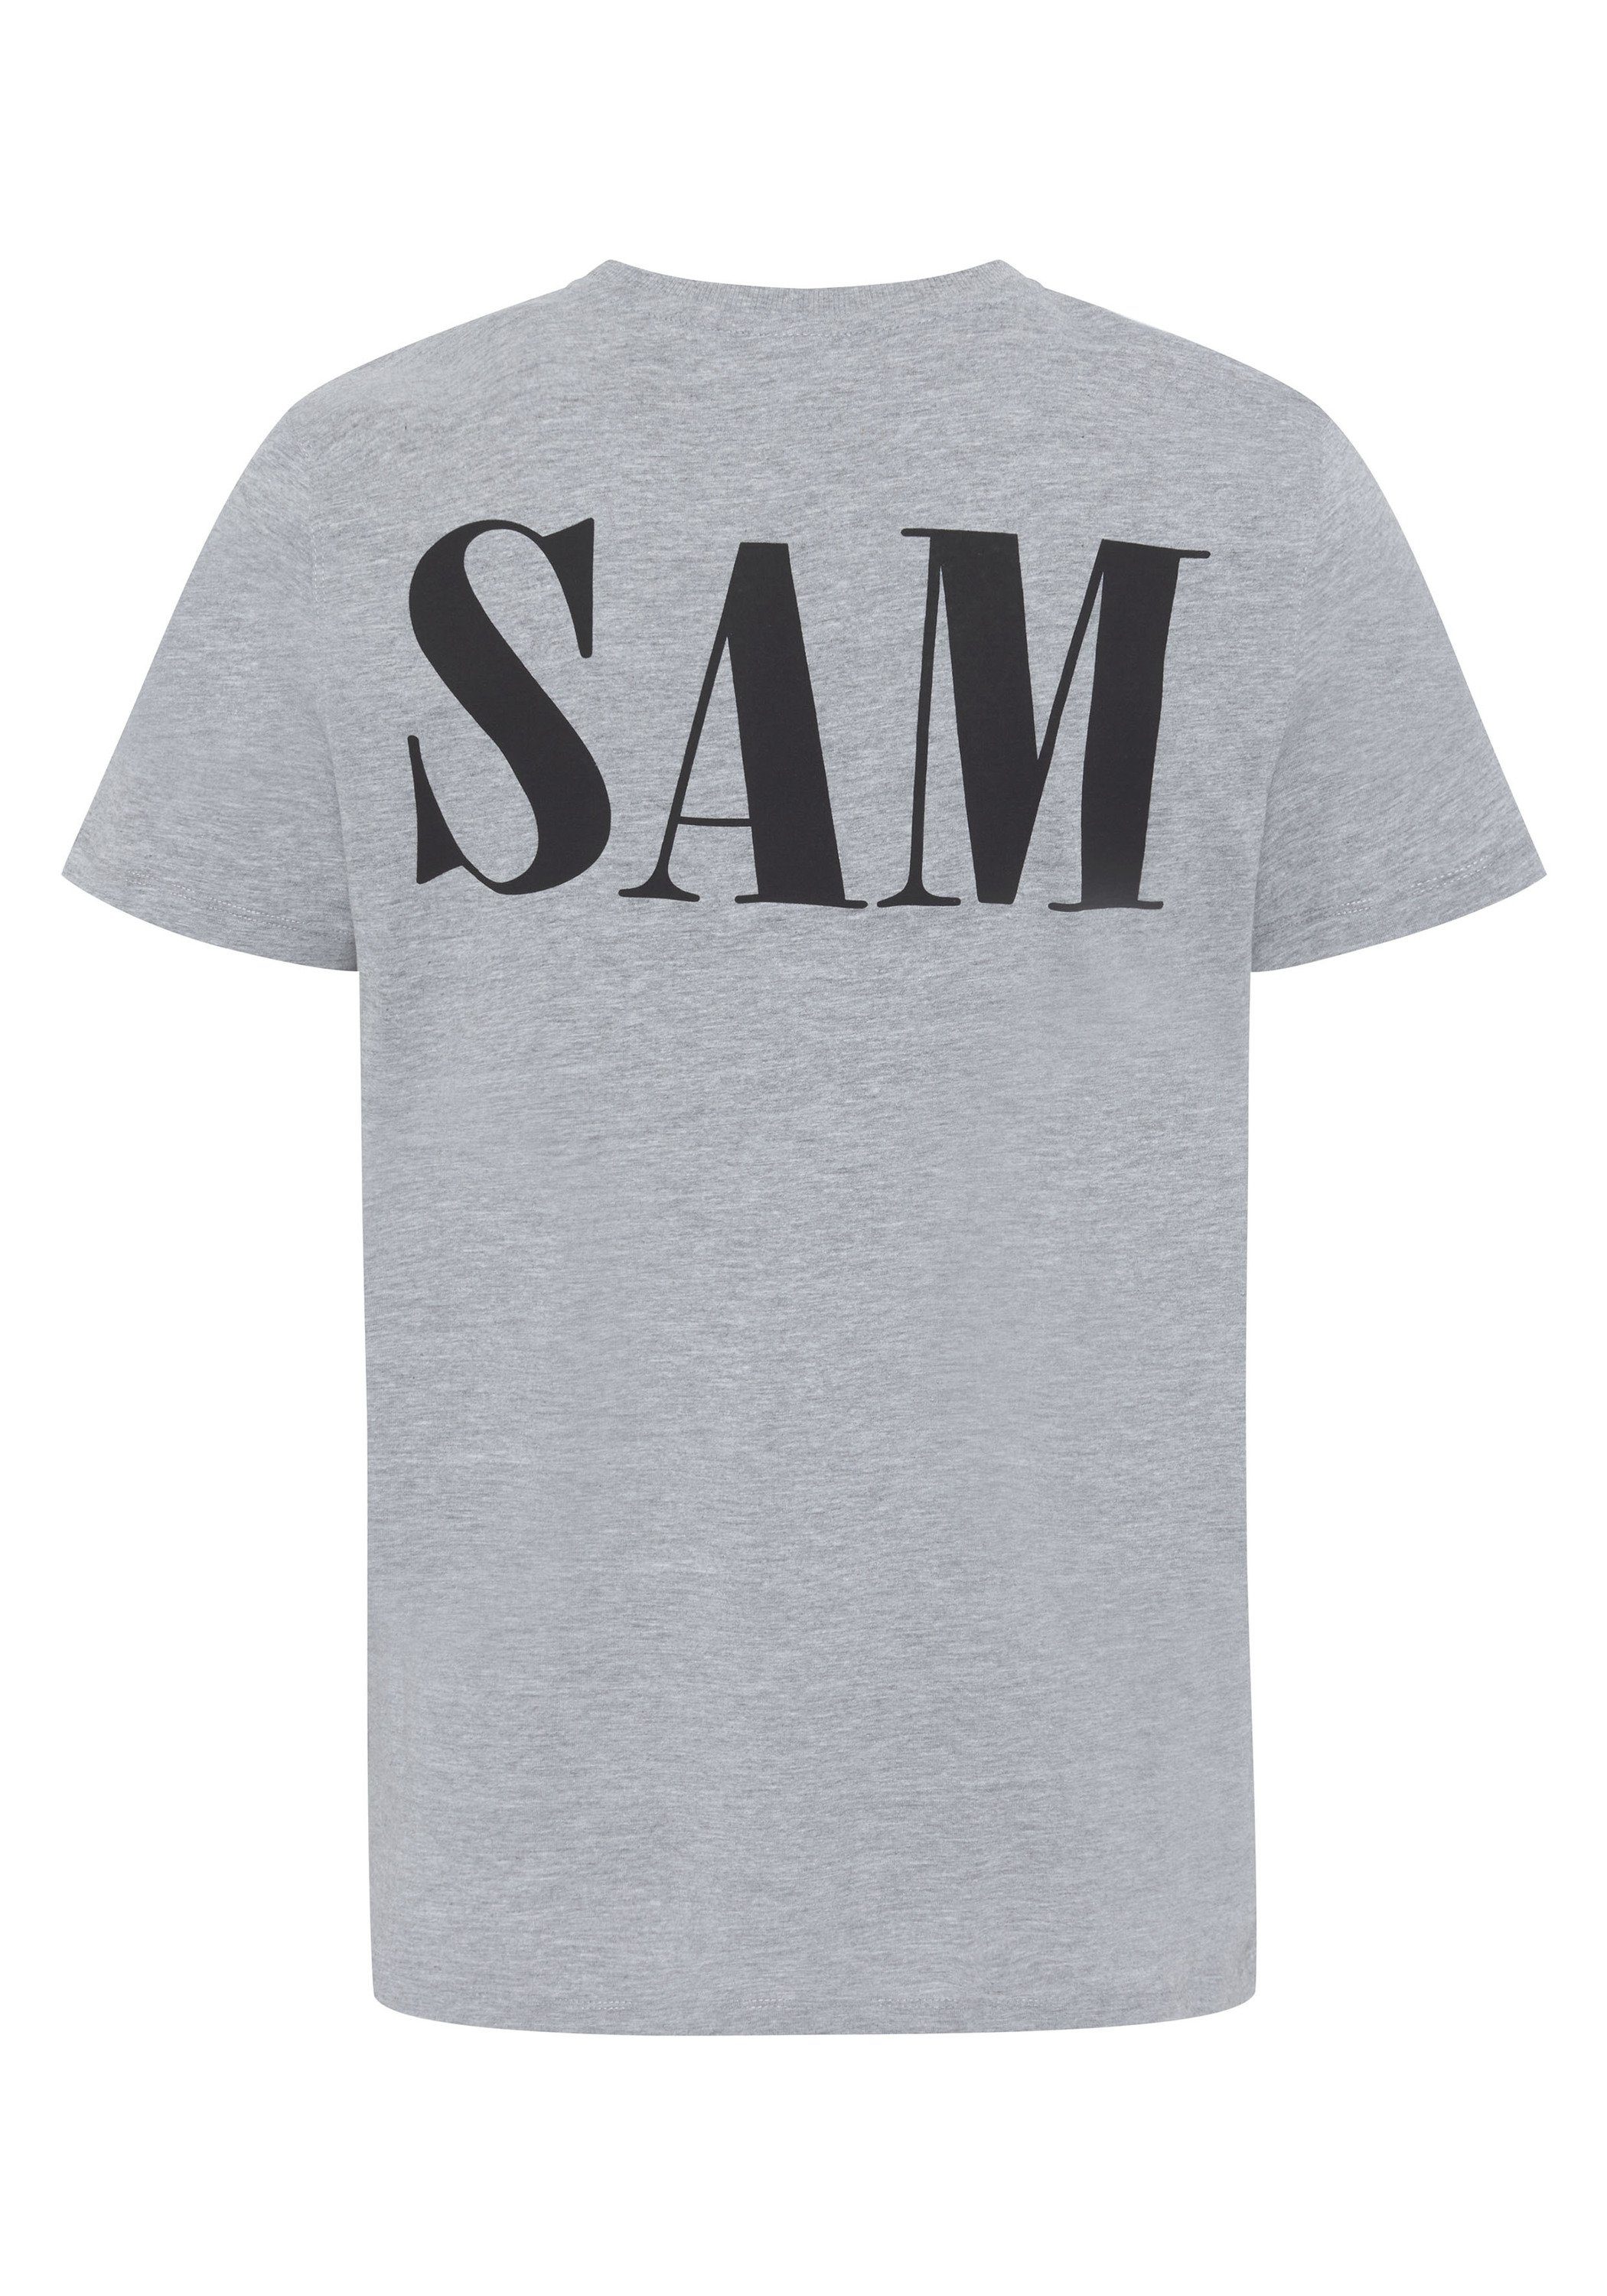 Uncle Sam Print-Shirt Print Logo 17-4402M Gray Melange mit Neutral